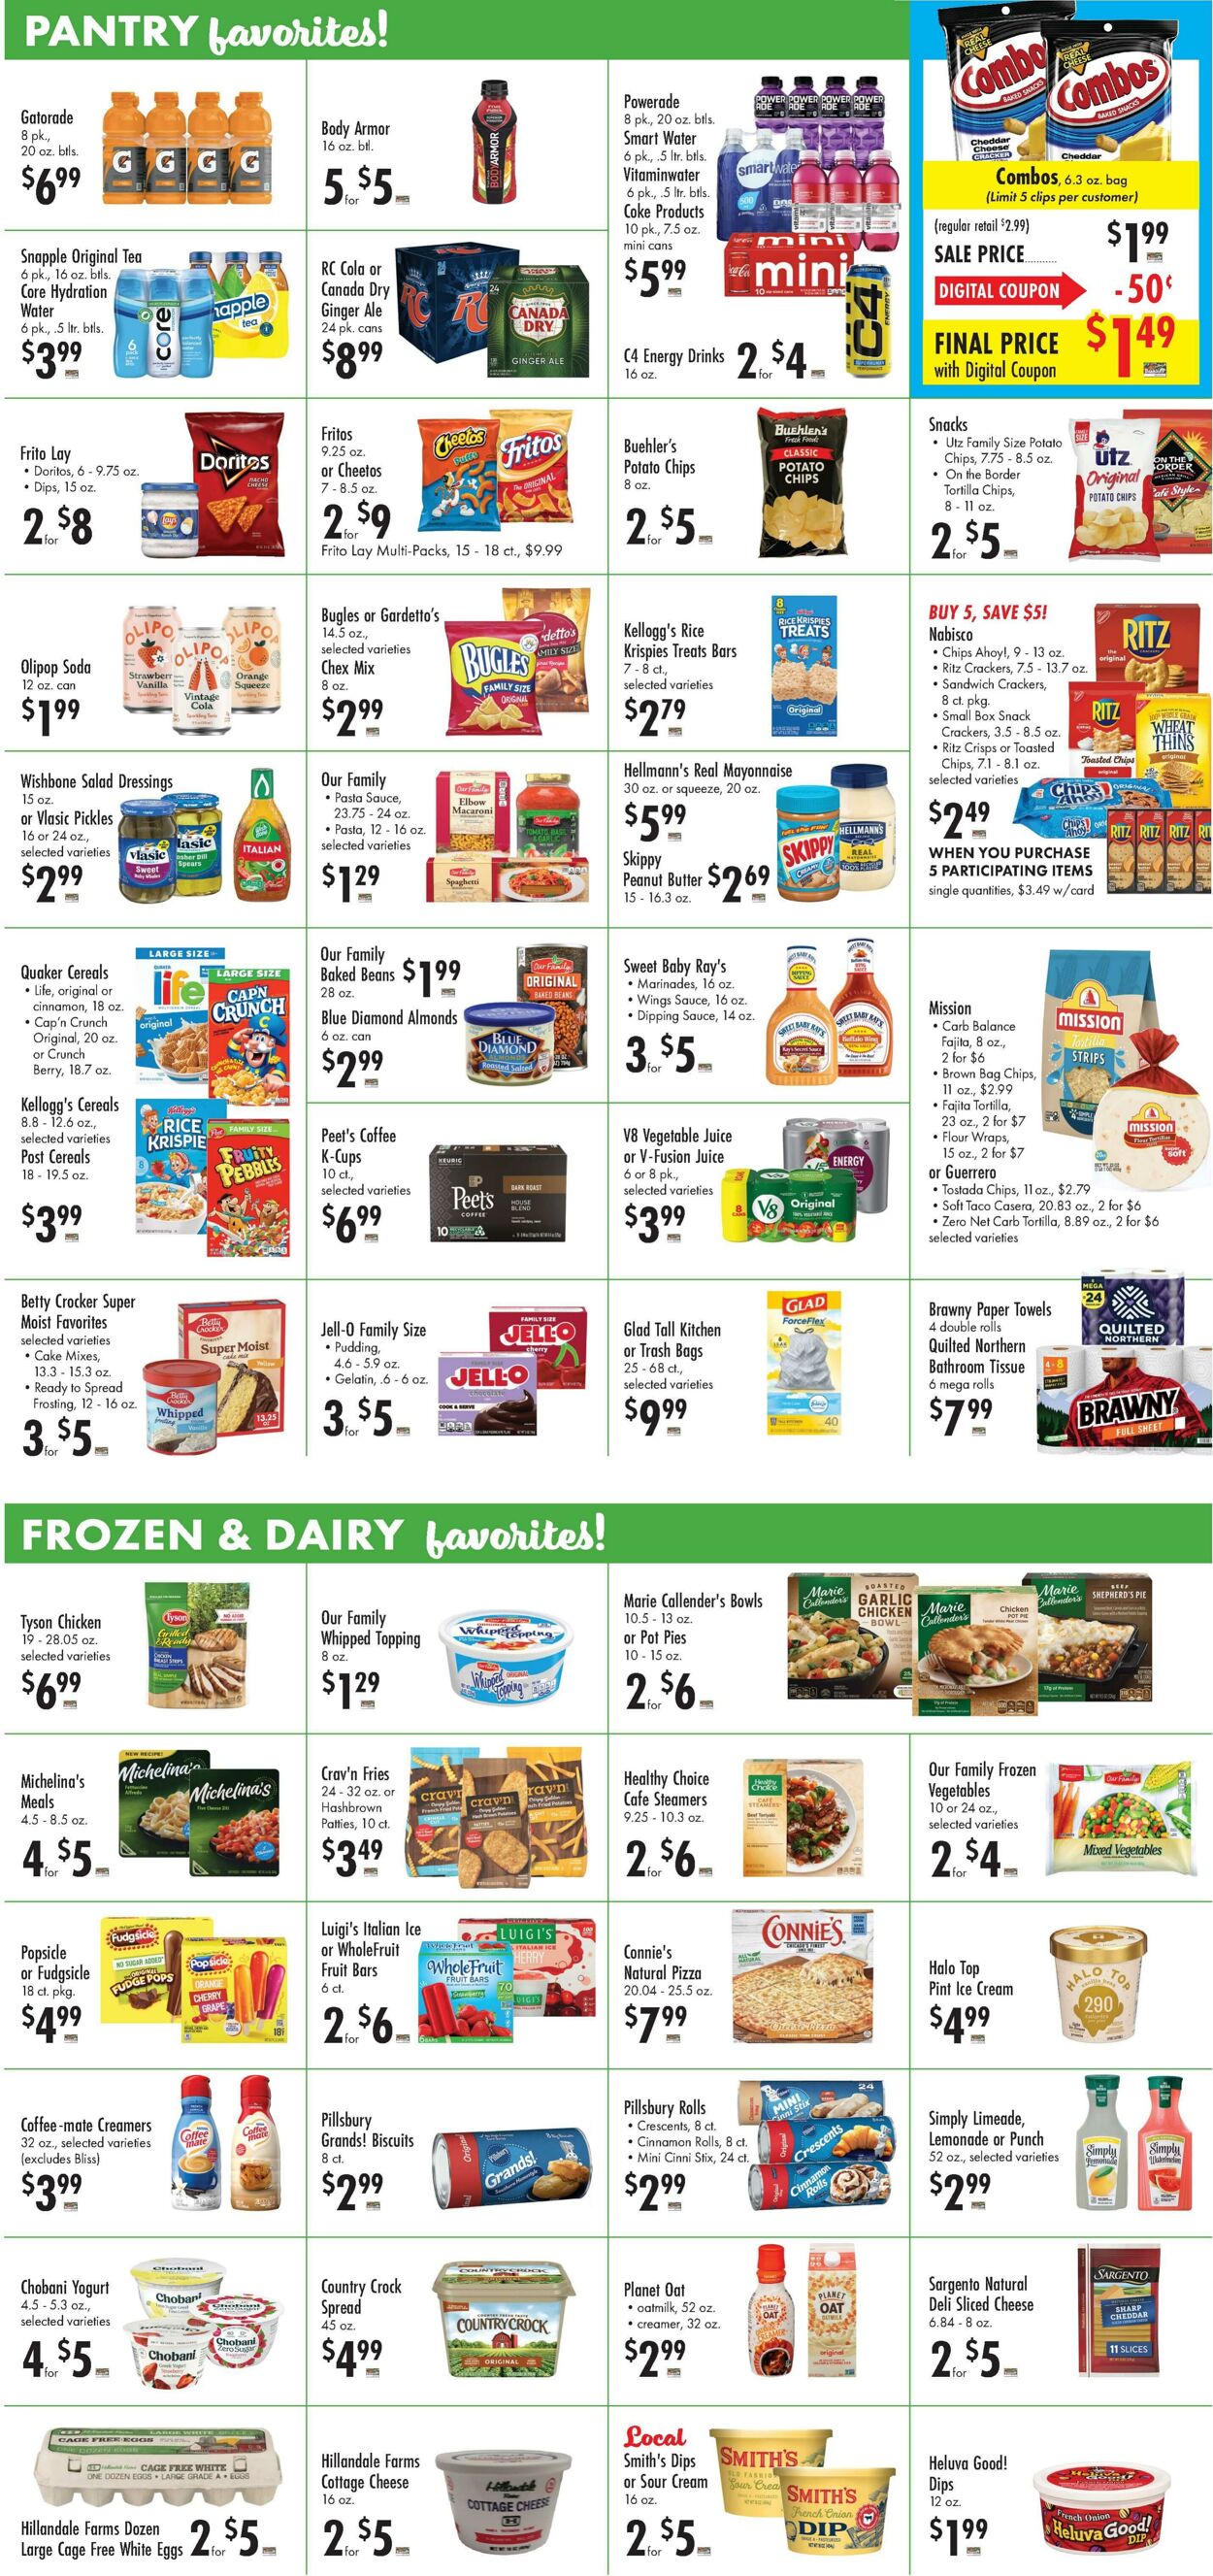 Weekly ad Buehler's Fresh Food 06/26/2024 - 07/02/2024